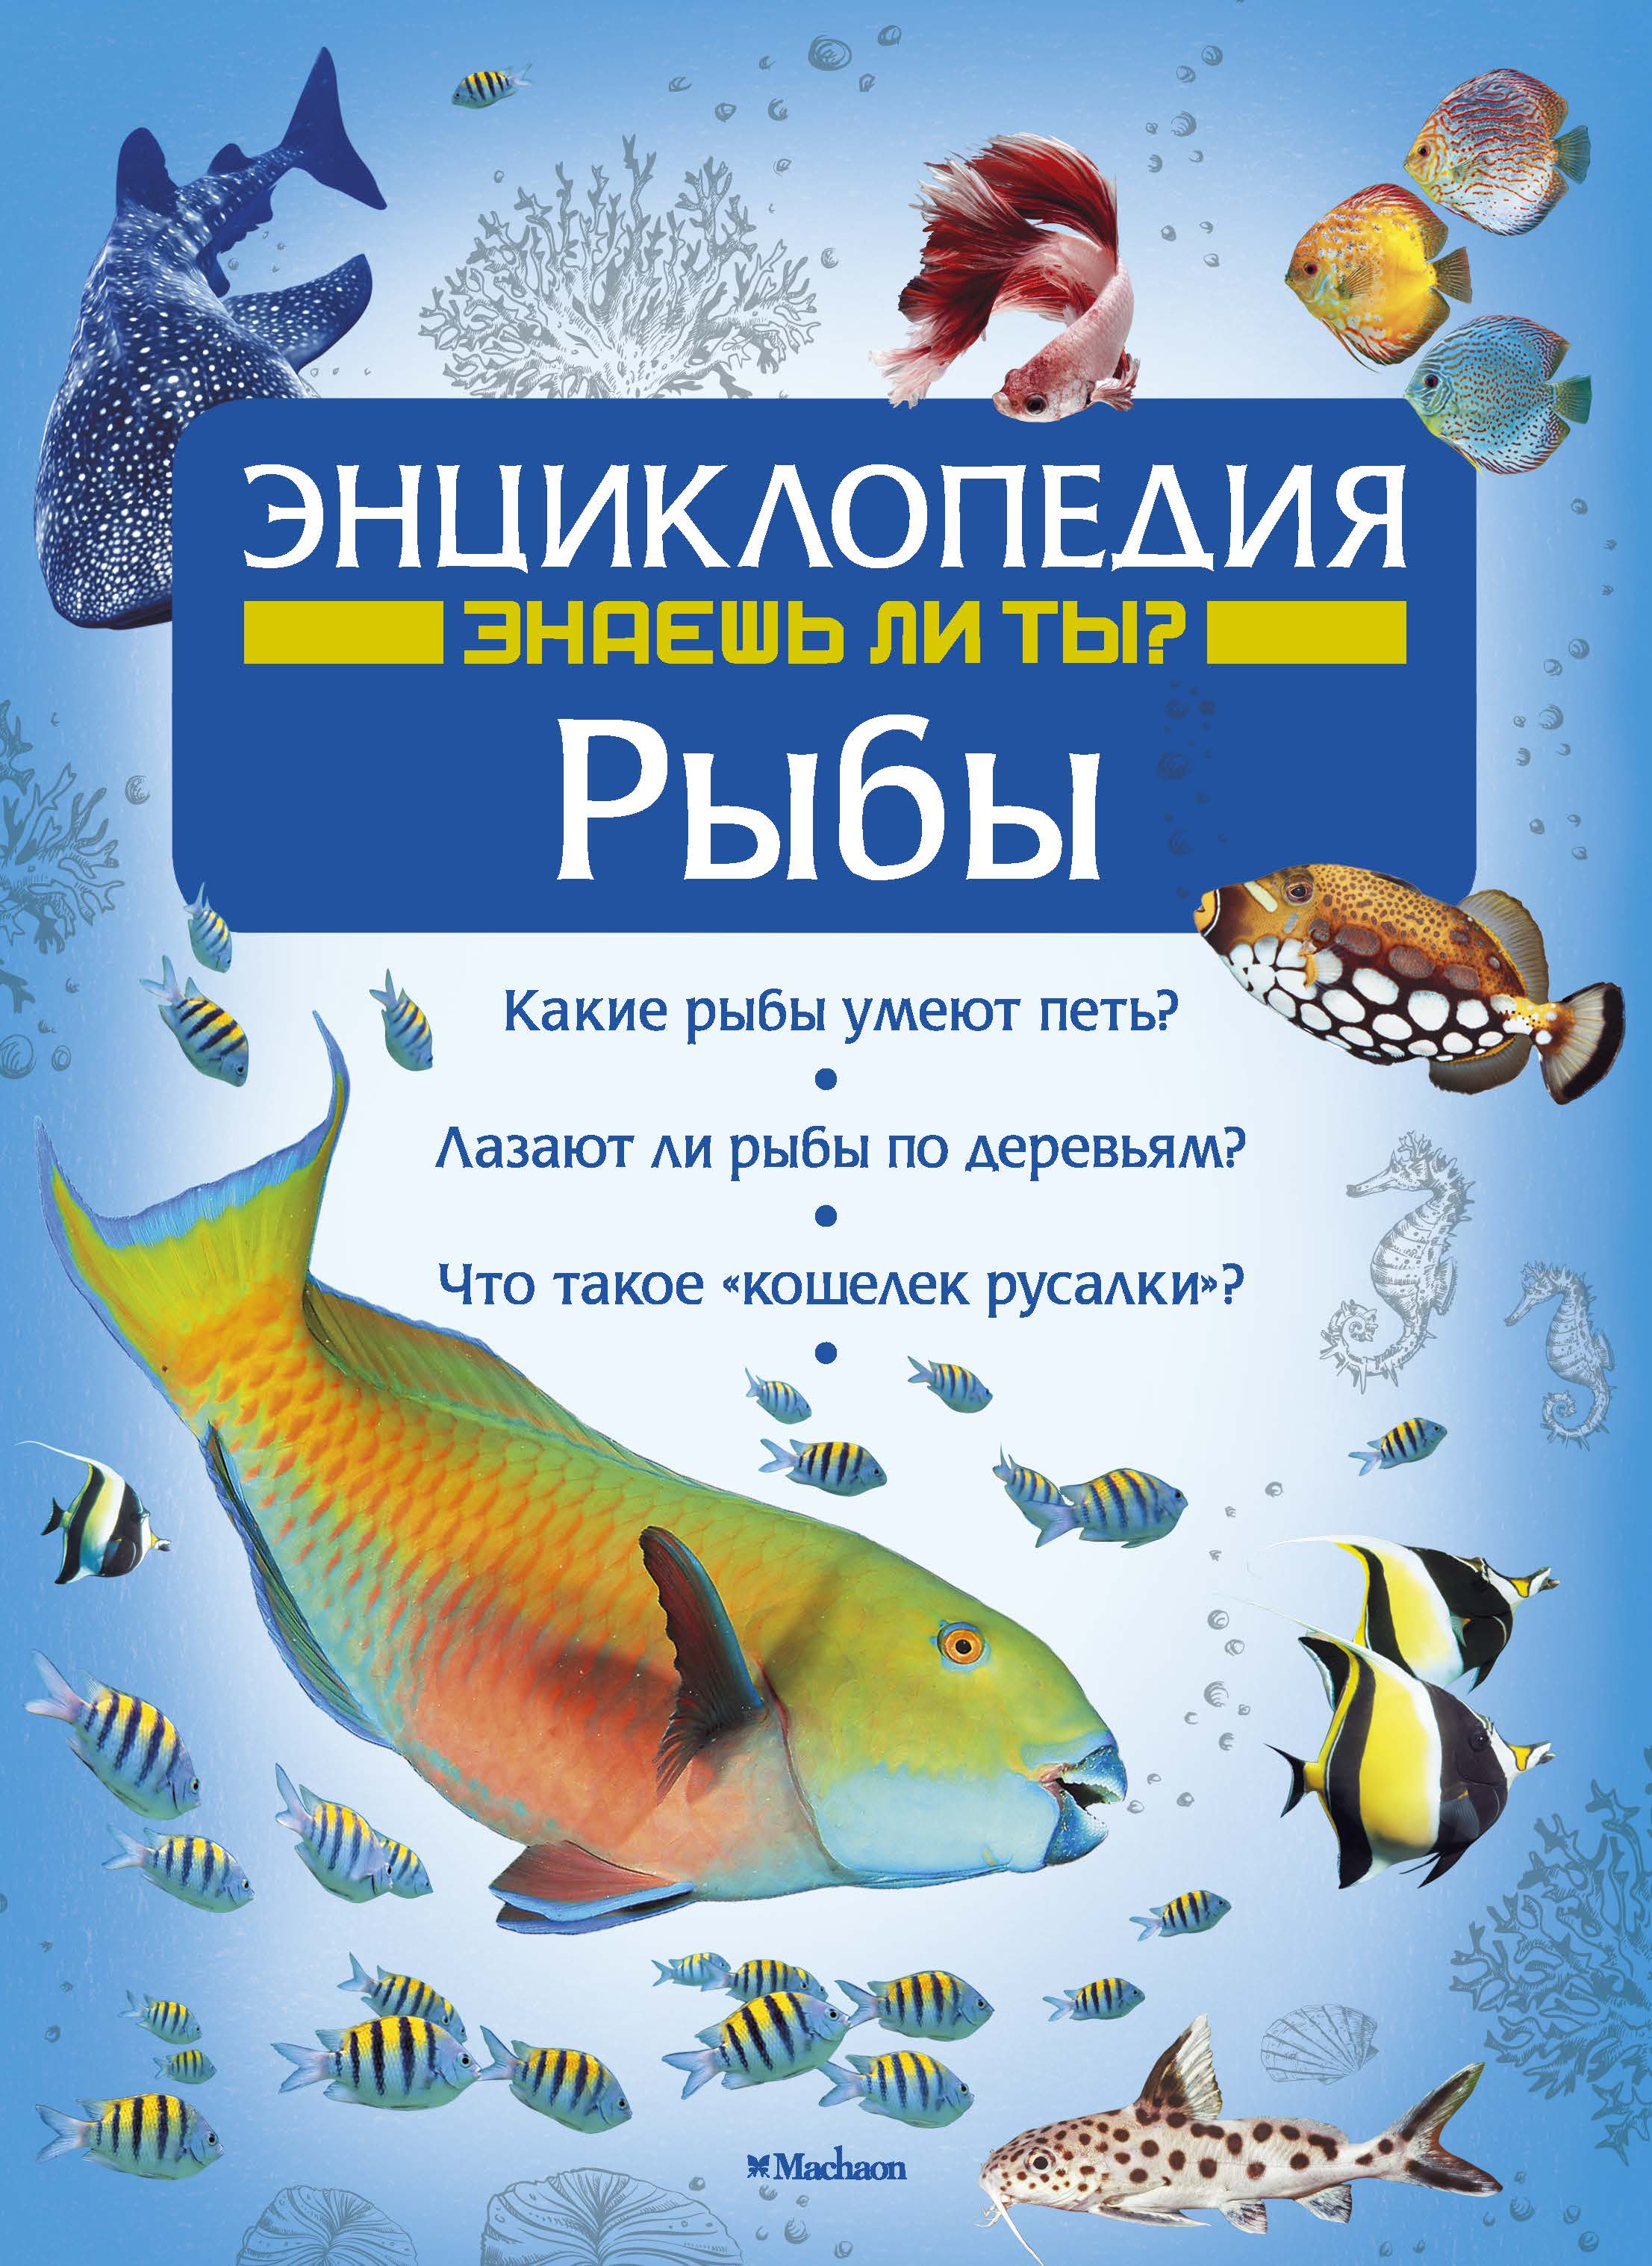 Книги про рыб. Энциклопедия рыб книга. Книги про рыб для детей.